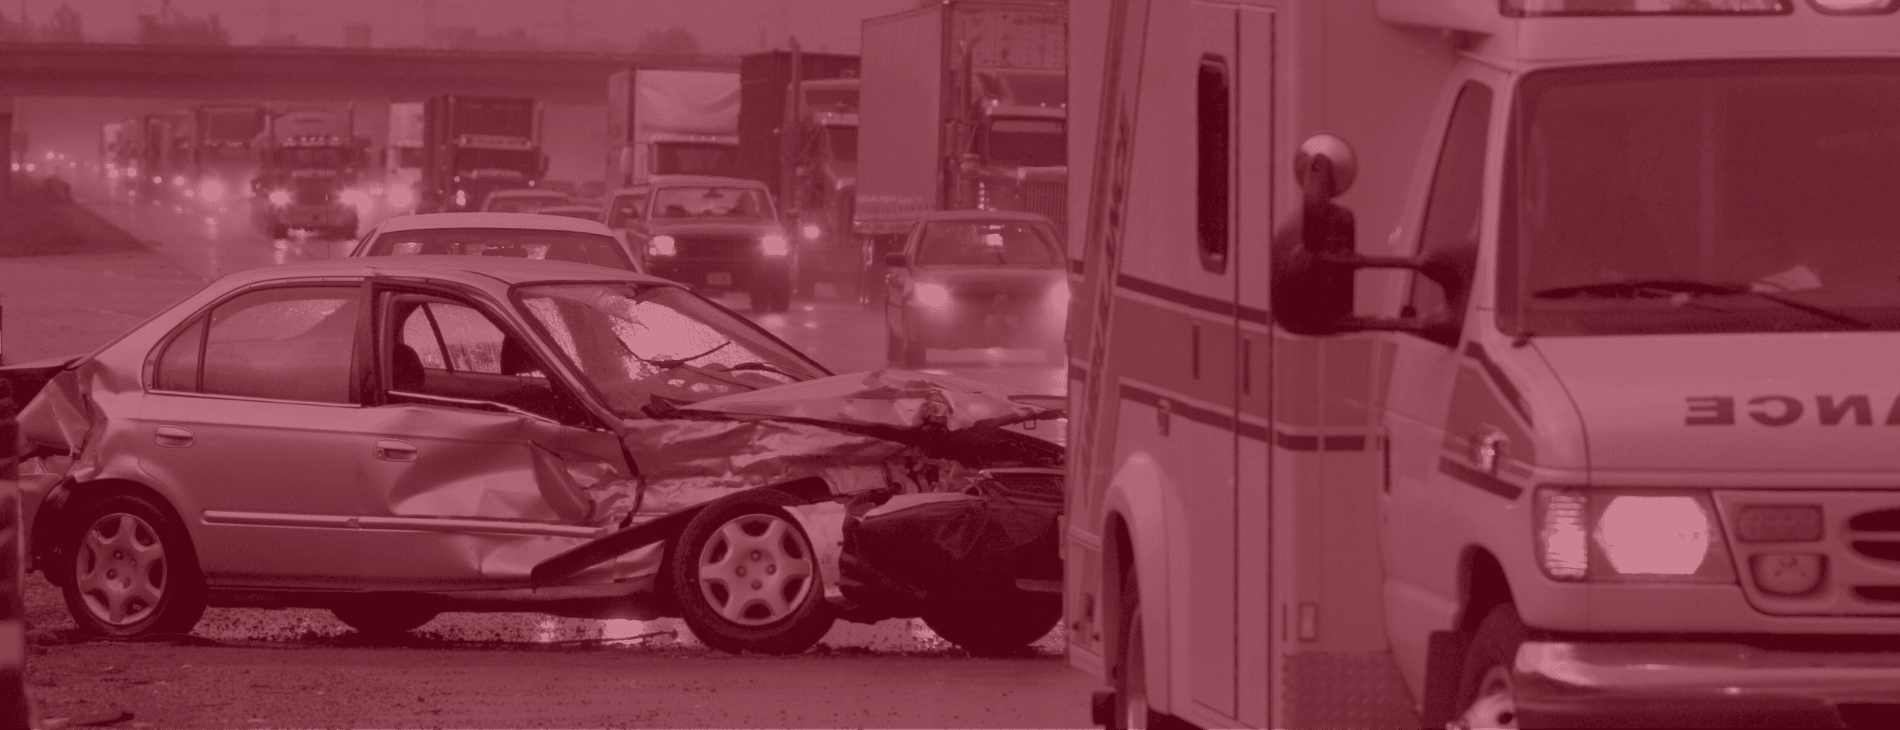 15 Freeway car crash